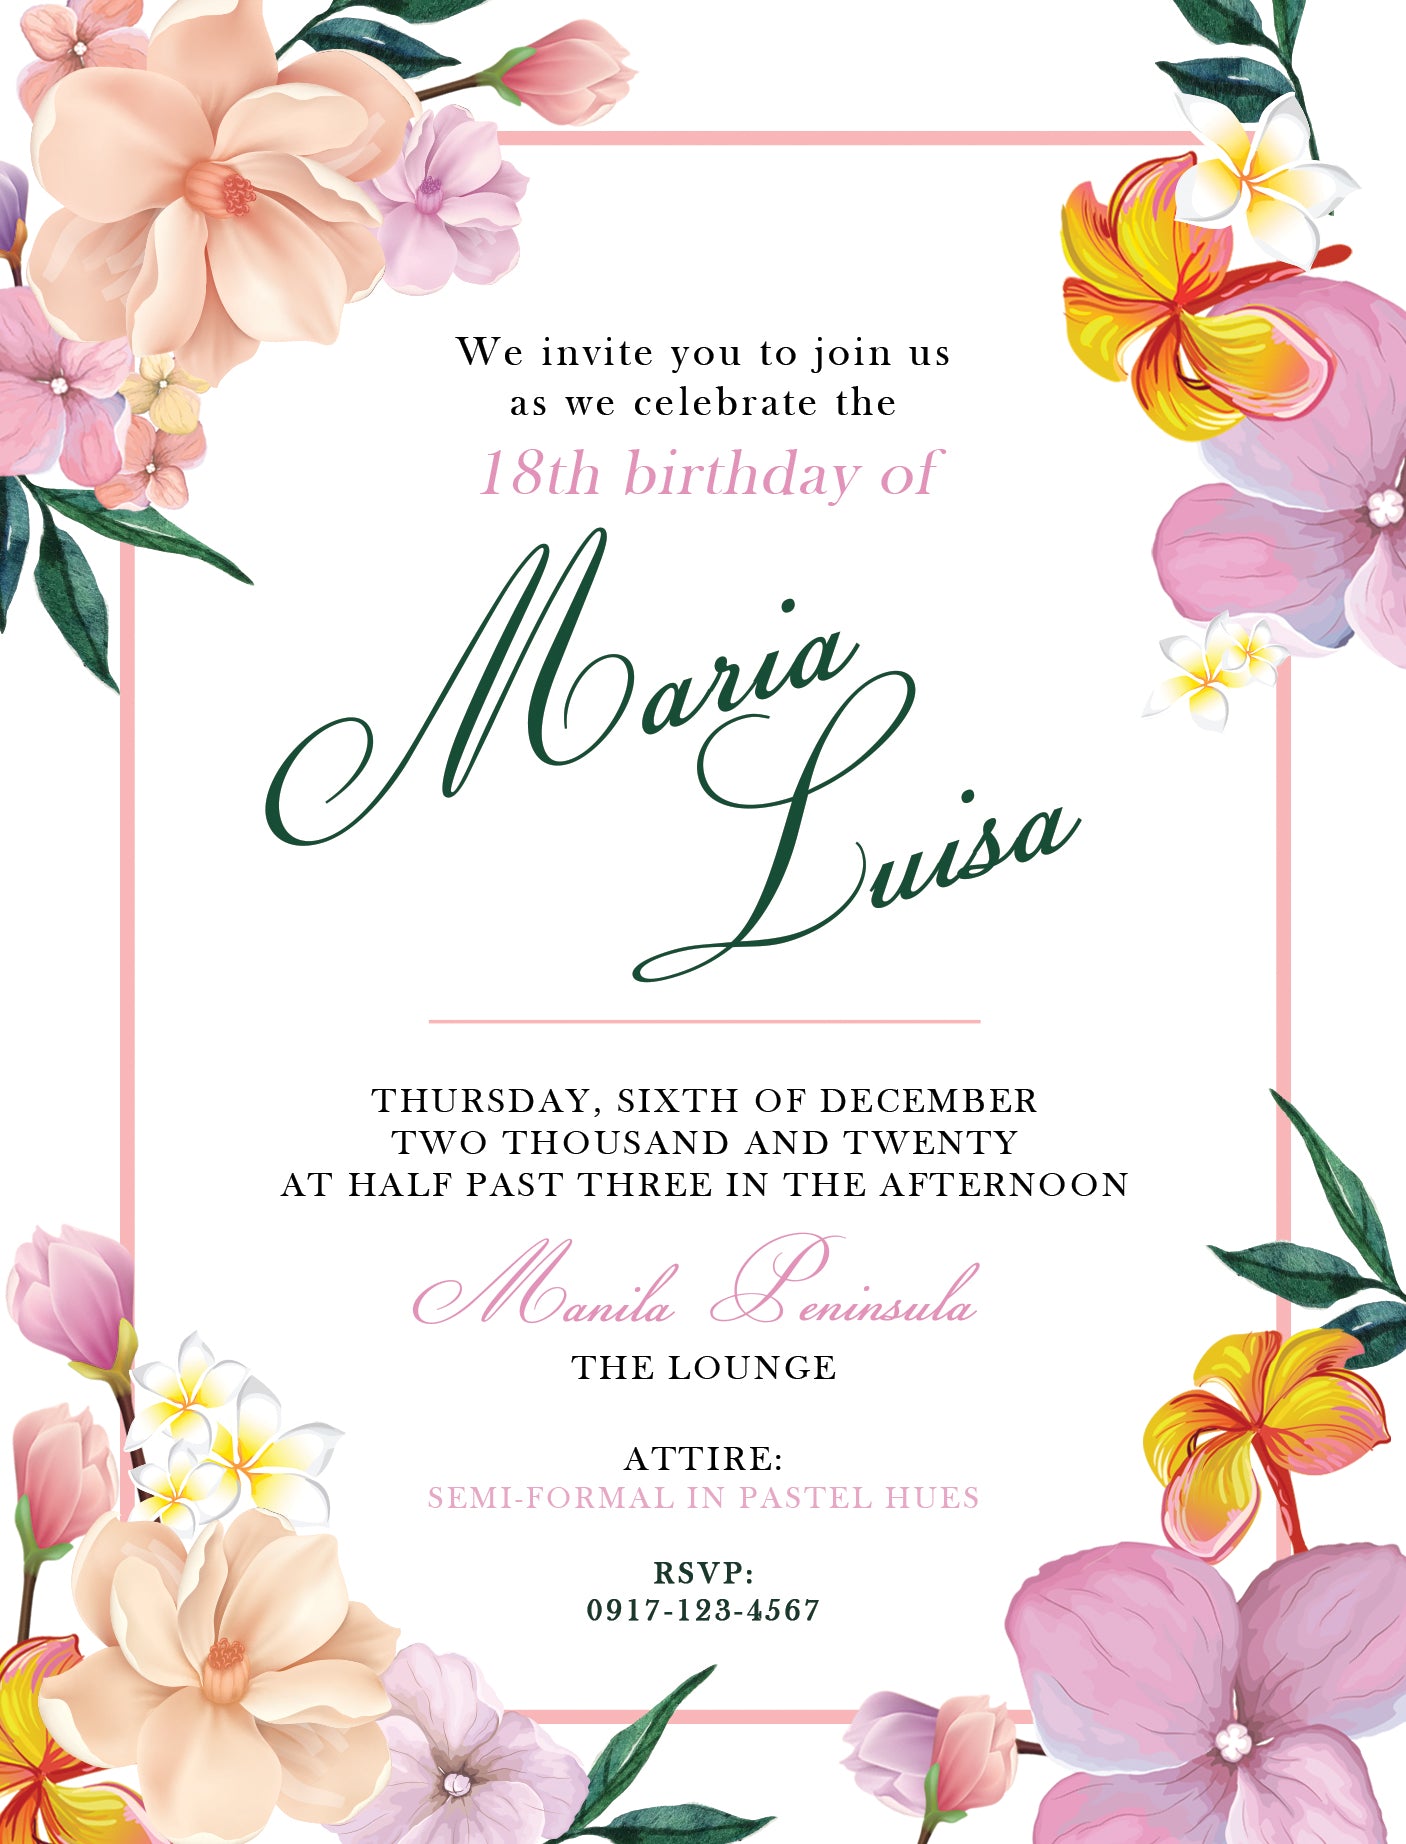 Luisa Debut Invitation